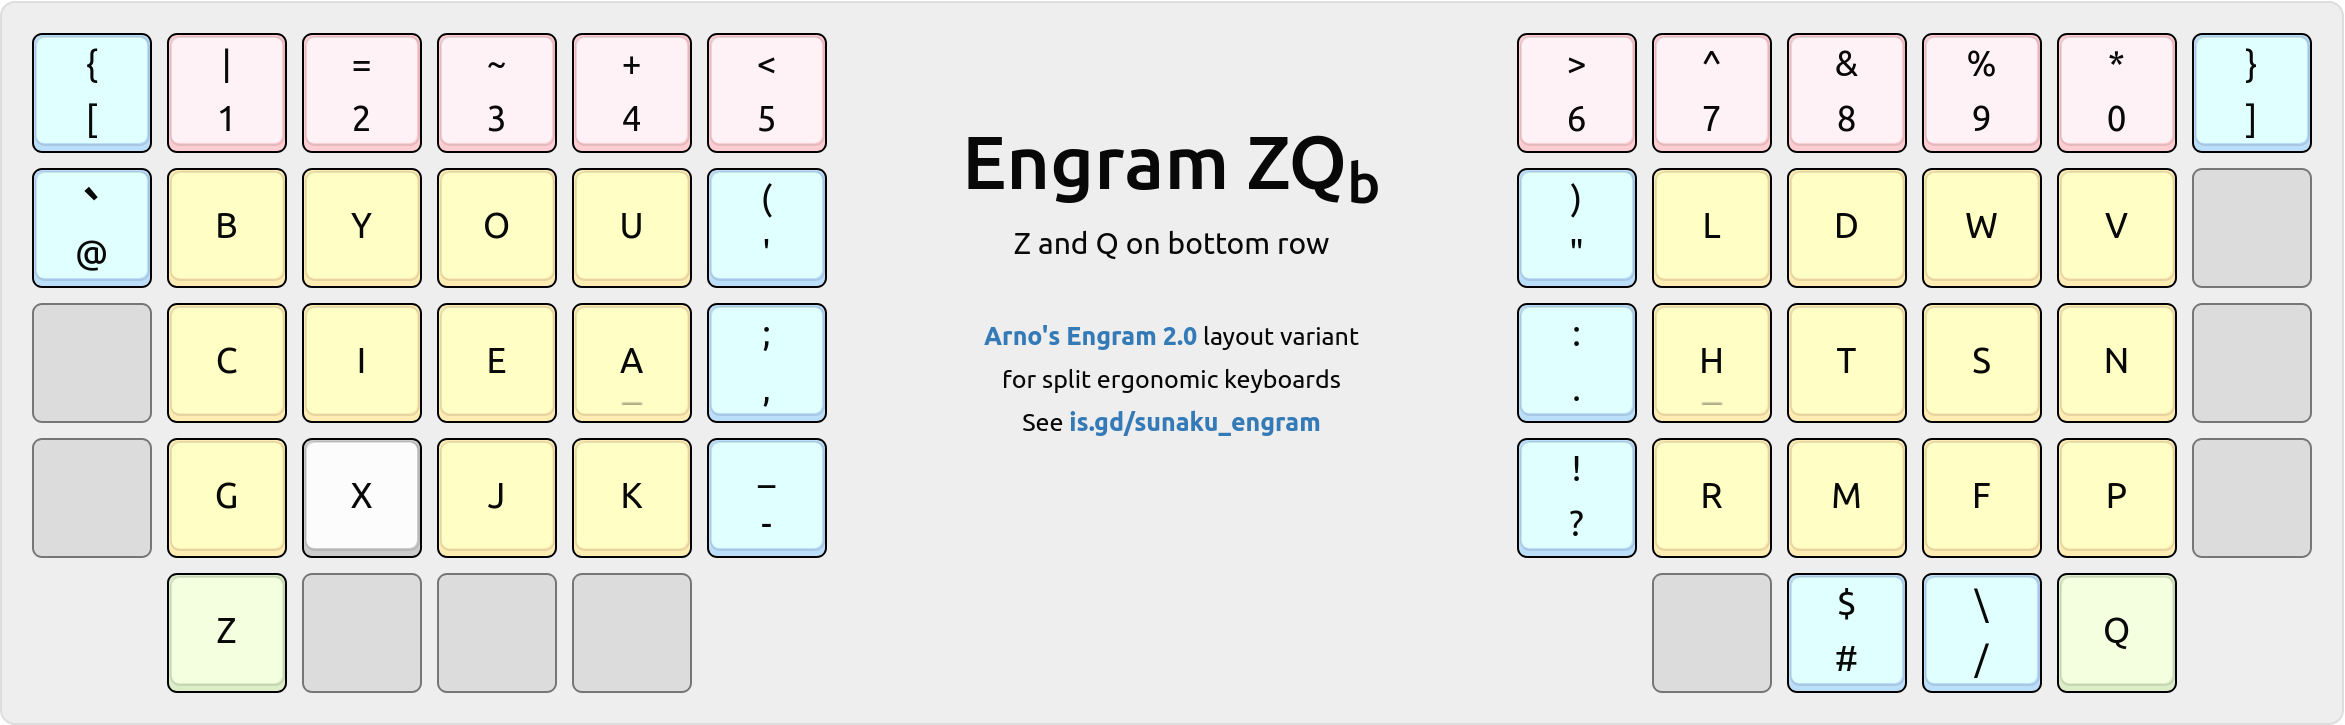 Engram-ZQb variant